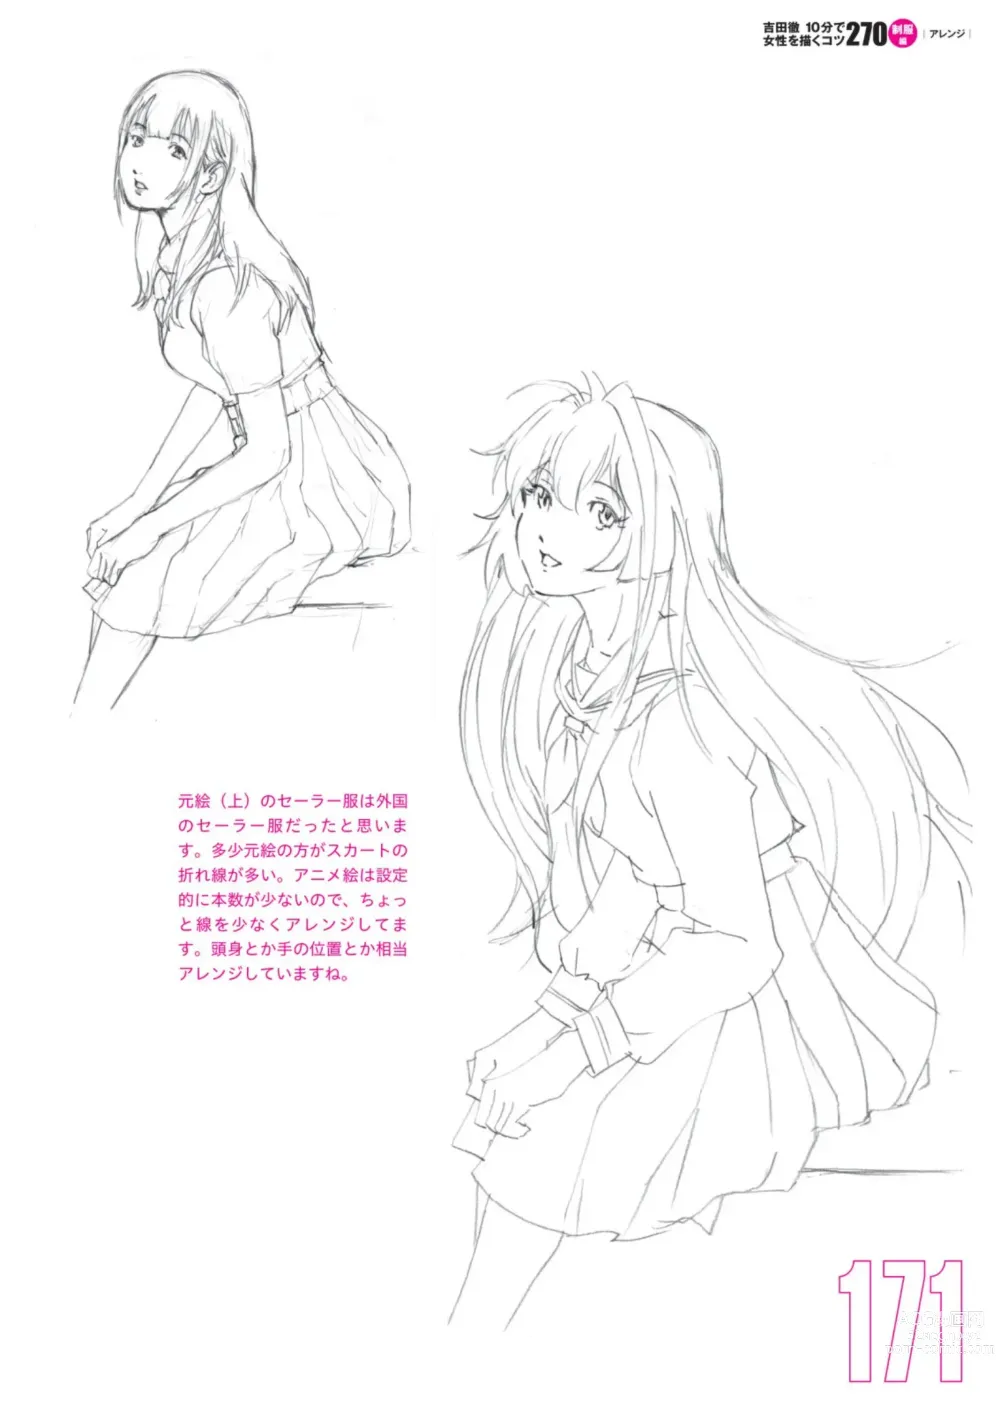 Page 153 of manga Toru Yoshida Tips for drawing women in 10 minutes 270 Uniforms